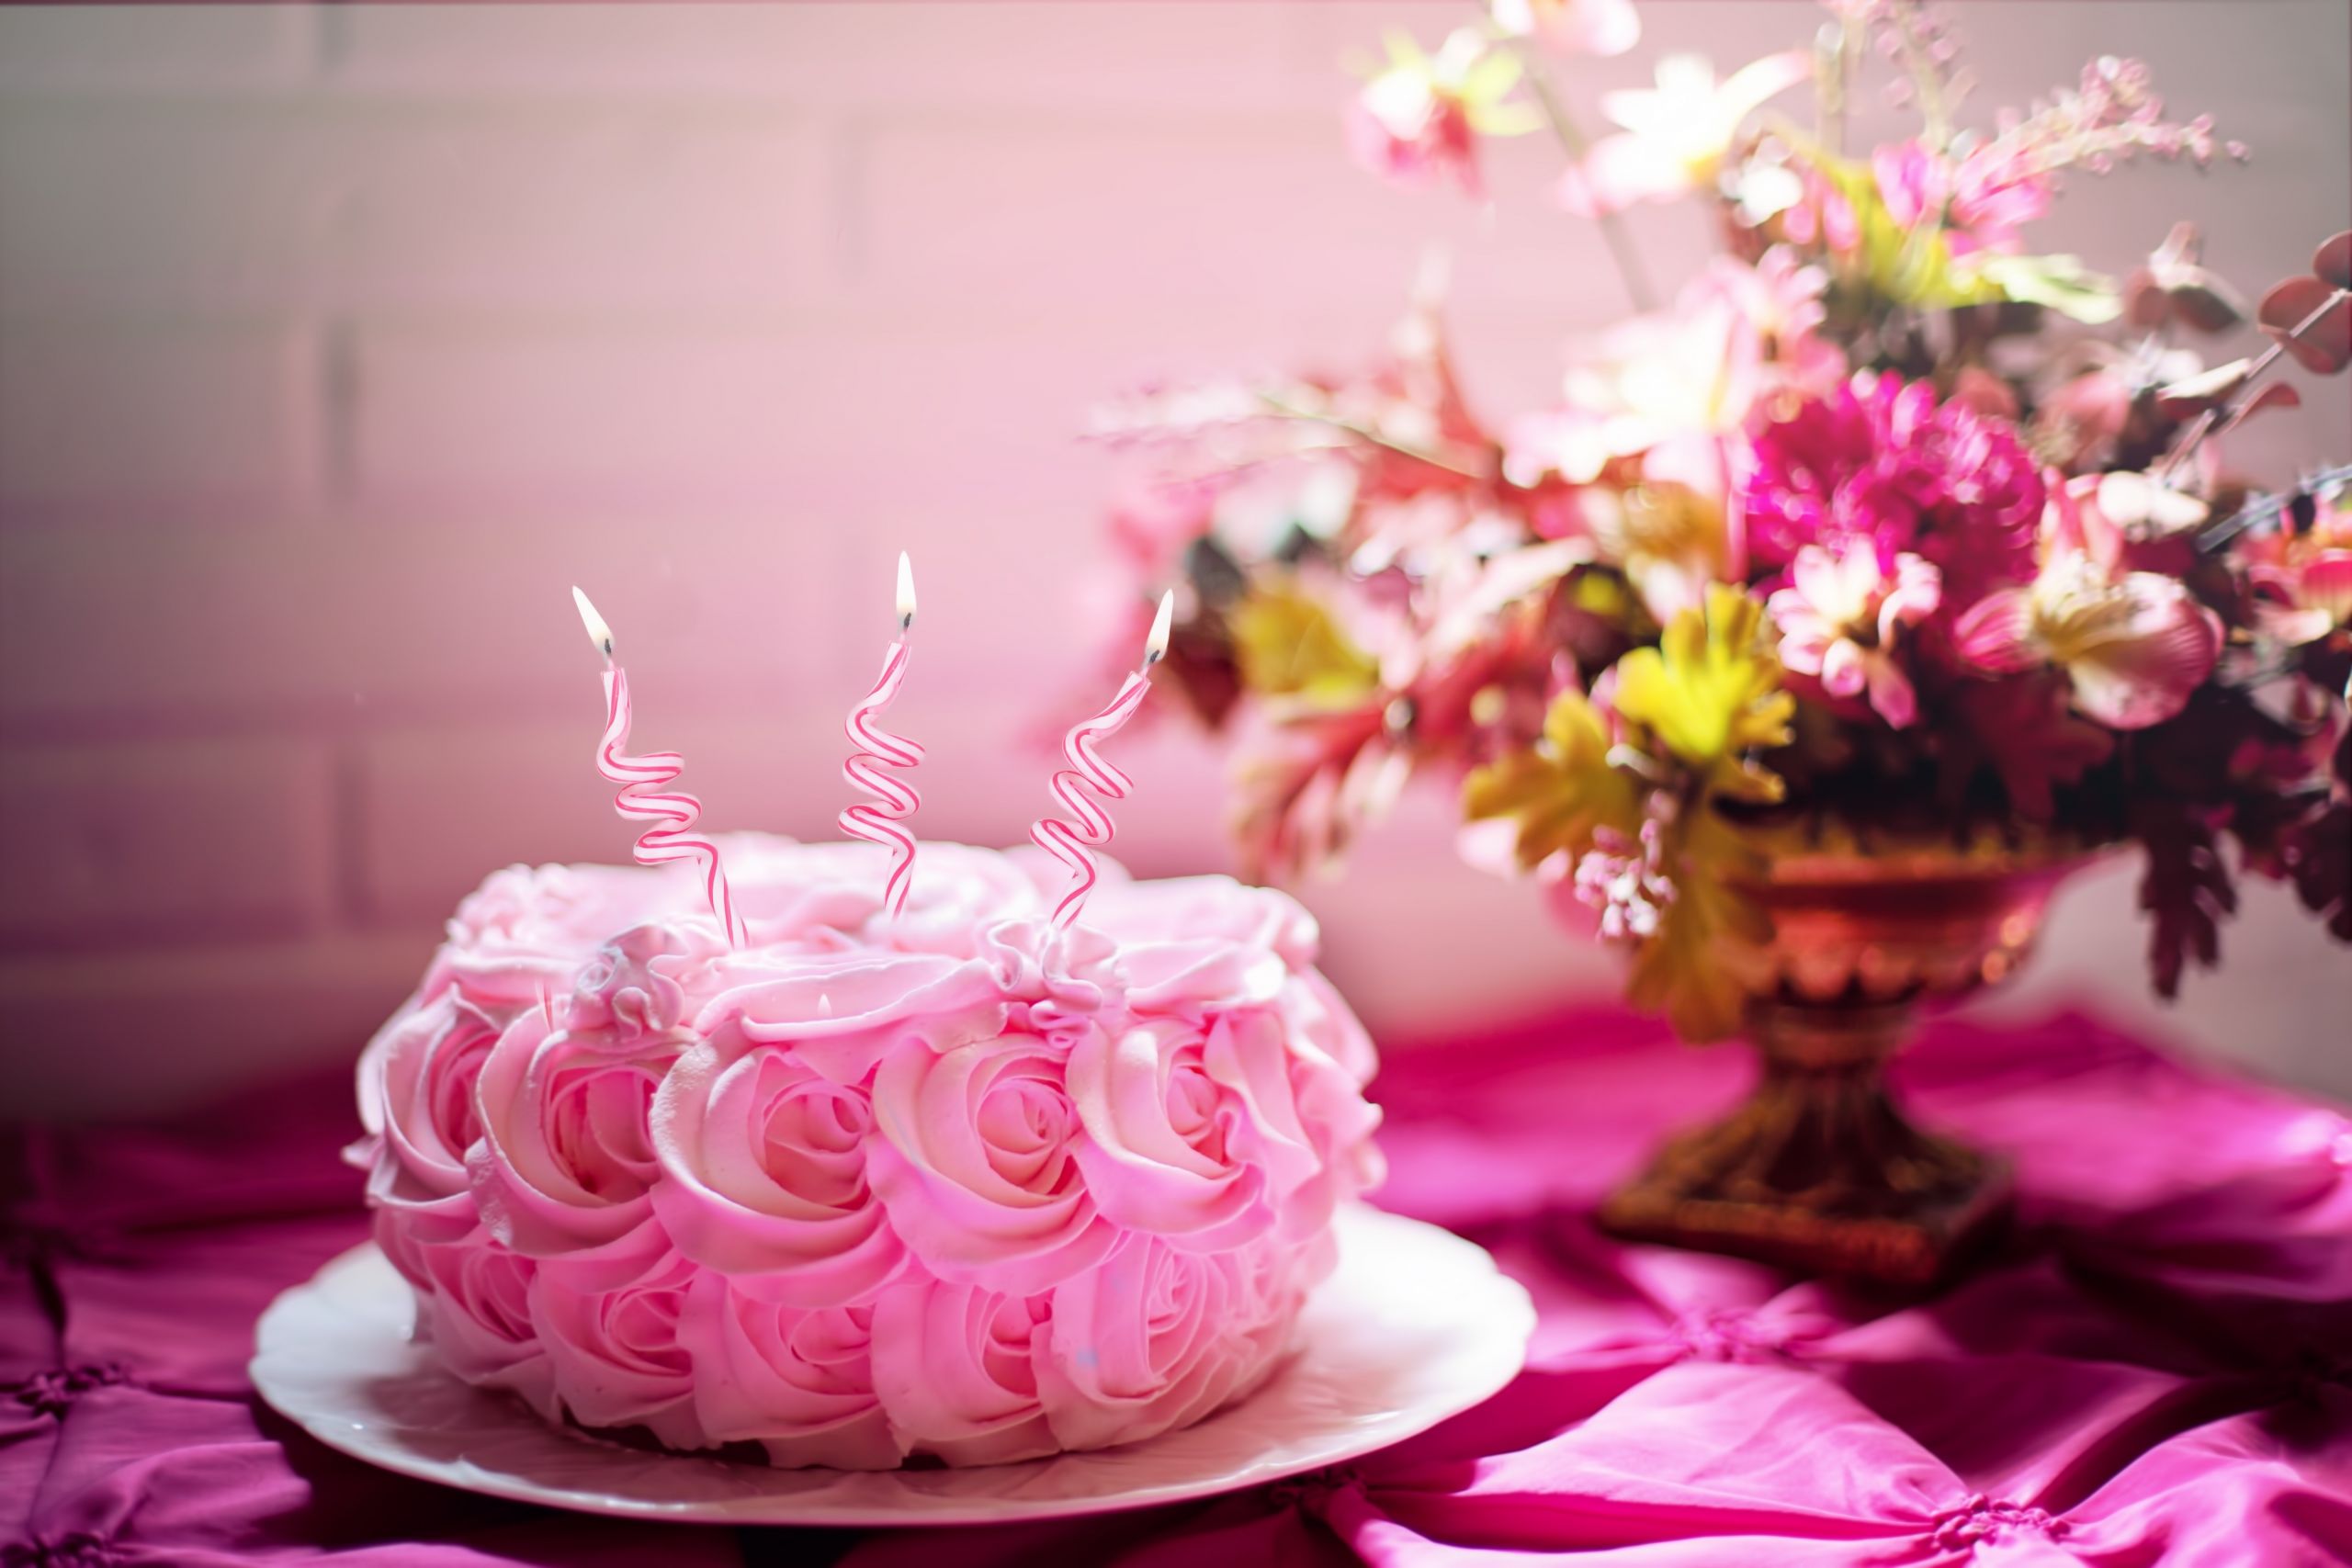 Beautiful Birthday Cakes Images
 500 Amazing Birthday Cake s · Pexels · Free Stock s